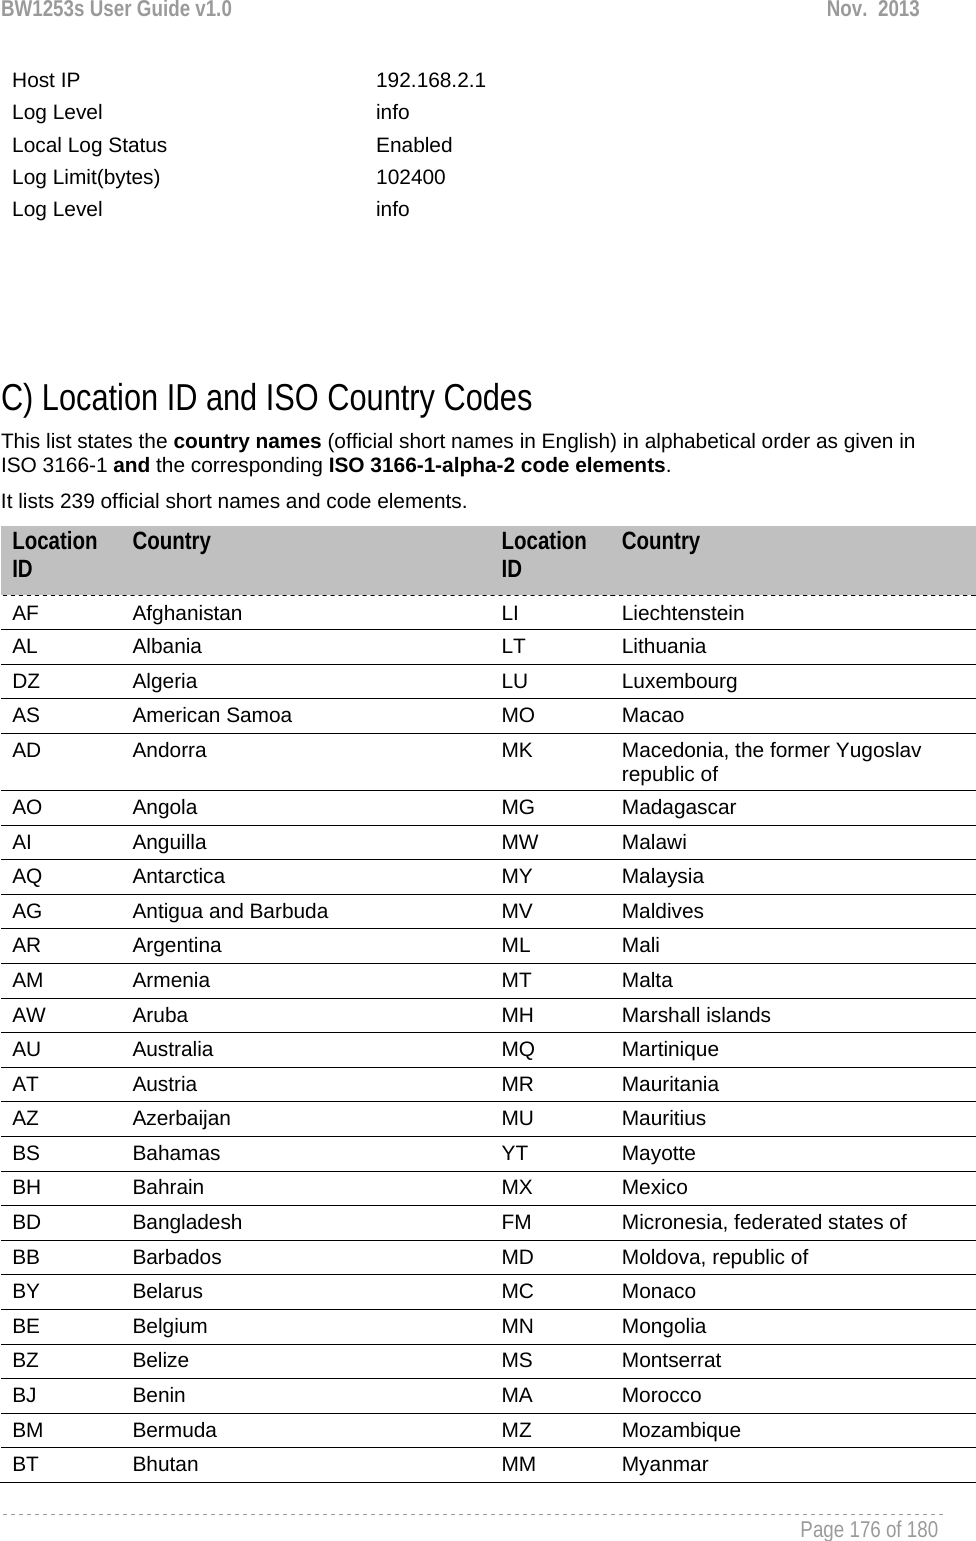 BW1253s User Guide v1.0  Nov.  2013     Page 176 of 180   Host IP  192.168.2.1 Log Level  info Local Log Status  Enabled Log Limit(bytes)  102400 Log Level  info     C) Location ID and ISO Country Codes This list states the country names (official short names in English) in alphabetical order as given in ISO 3166-1 and the corresponding ISO 3166-1-alpha-2 code elements.  It lists 239 official short names and code elements. Location ID  Country  Location ID  Country AF  Afghanistan  LI  Liechtenstein AL  Albania  LT  Lithuania DZ  Algeria  LU  Luxembourg AS  American Samoa  MO  Macao AD  Andorra  MK  Macedonia, the former Yugoslav republic of AO  Angola  MG  Madagascar AI  Anguilla  MW  Malawi AQ  Antarctica  MY  Malaysia AG  Antigua and Barbuda  MV  Maldives AR  Argentina  ML  Mali AM  Armenia  MT  Malta AW  Aruba  MH  Marshall islands AU  Australia  MQ  Martinique AT  Austria  MR  Mauritania AZ  Azerbaijan  MU  Mauritius BS  Bahamas  YT  Mayotte BH  Bahrain  MX  Mexico BD  Bangladesh  FM  Micronesia, federated states of BB  Barbados  MD  Moldova, republic of BY  Belarus  MC  Monaco BE  Belgium  MN  Mongolia BZ  Belize  MS  Montserrat BJ  Benin  MA  Morocco BM  Bermuda  MZ  Mozambique BT  Bhutan  MM  Myanmar 